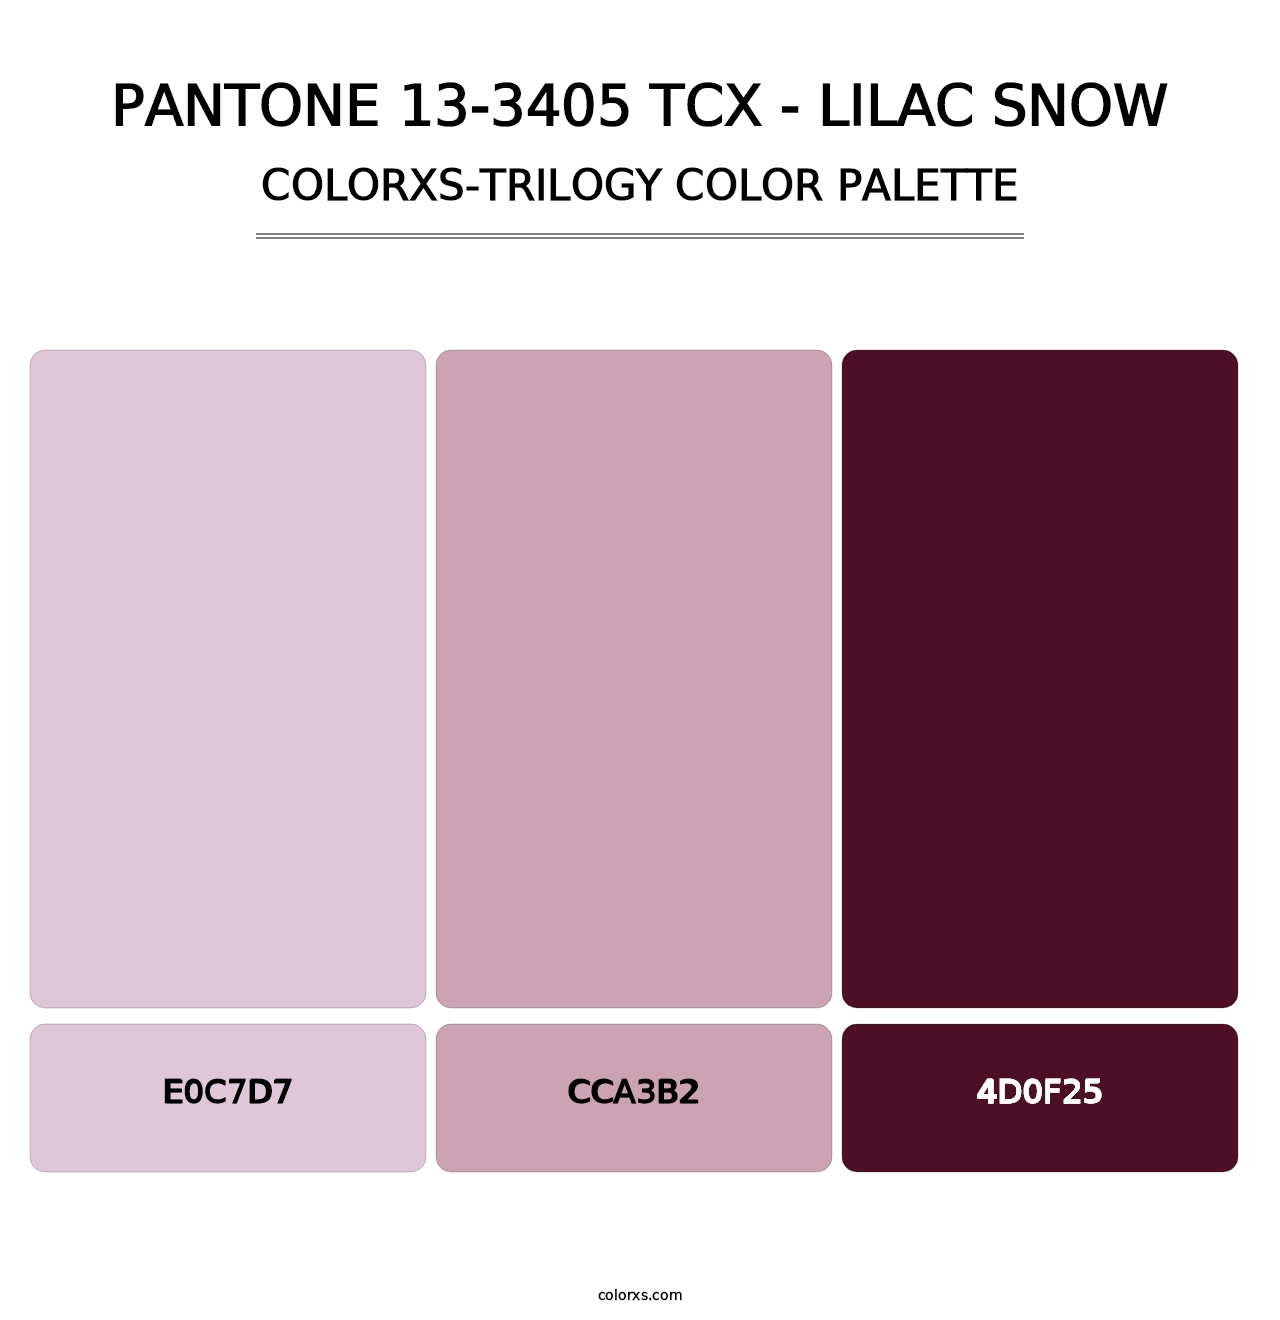 PANTONE 13-3405 TCX - Lilac Snow - Colorxs Trilogy Palette